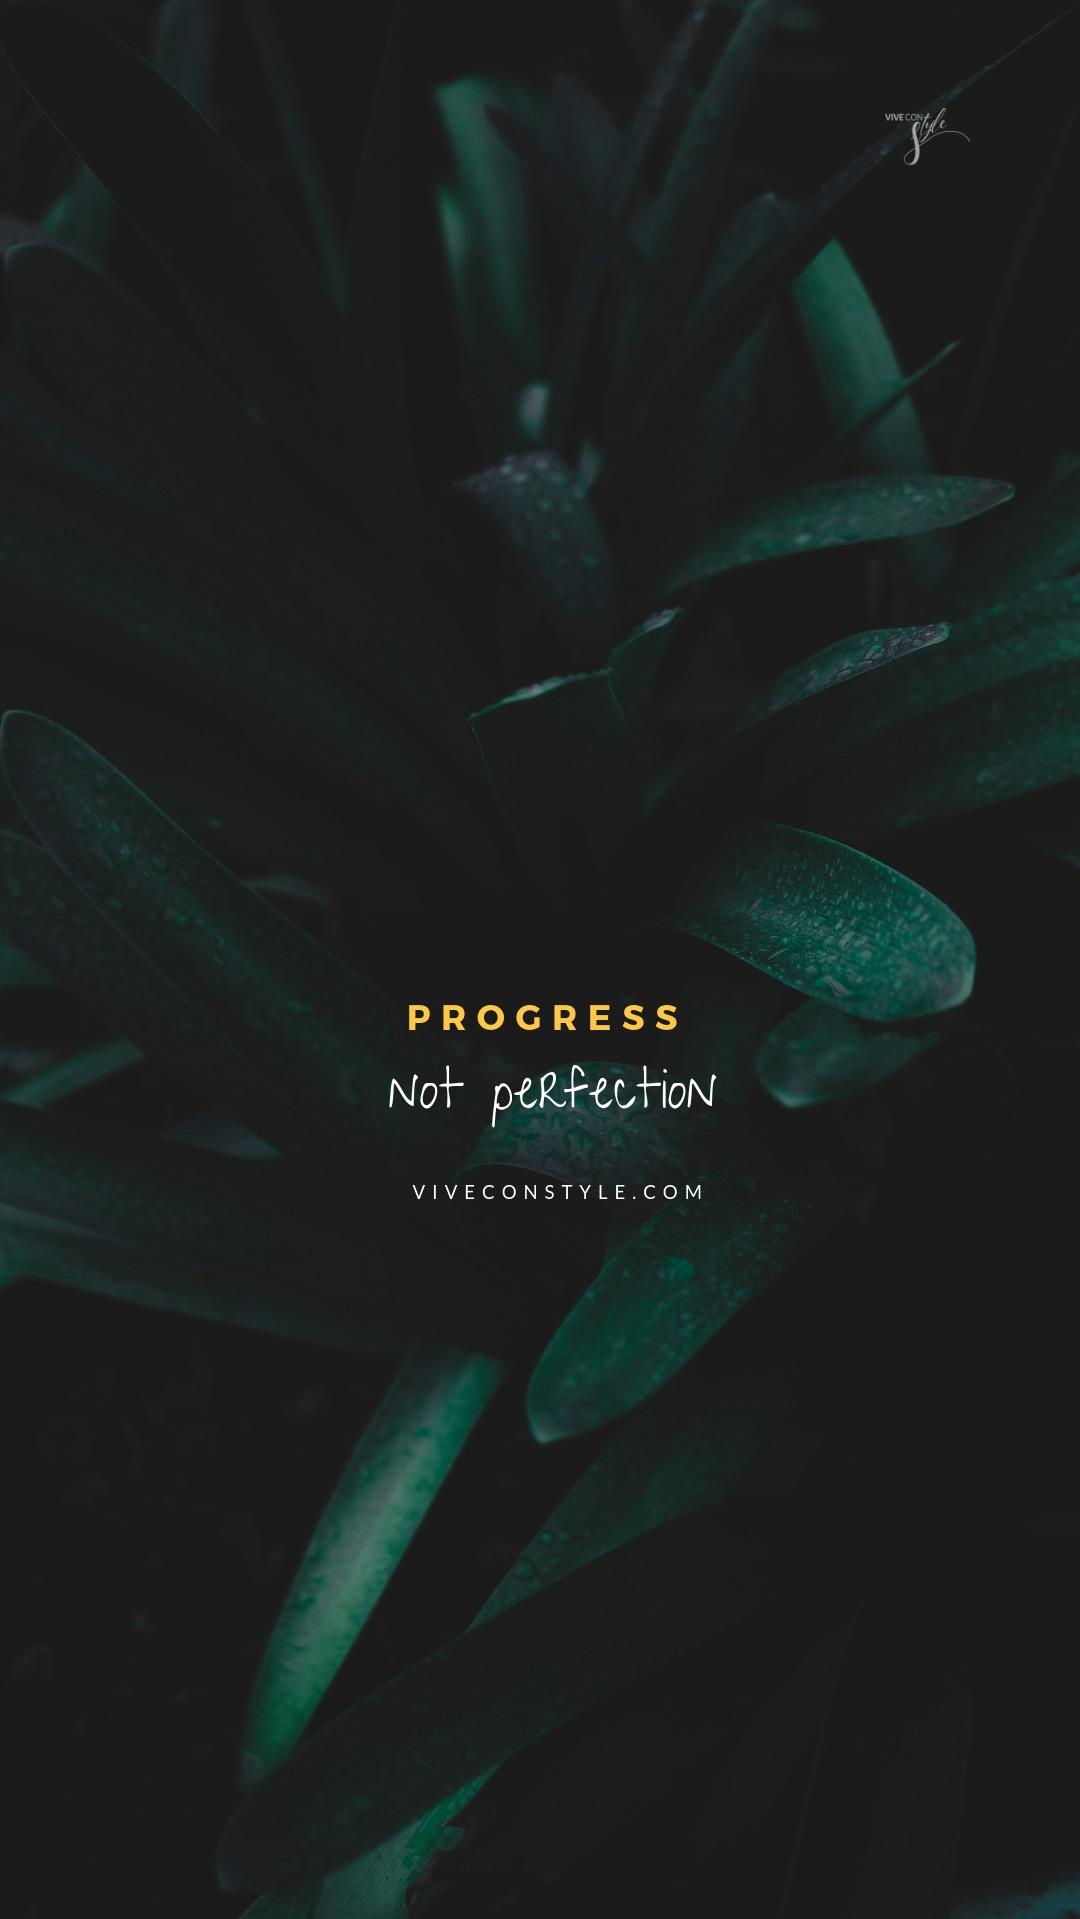 Progress not perfection   VIVE CON STYLE